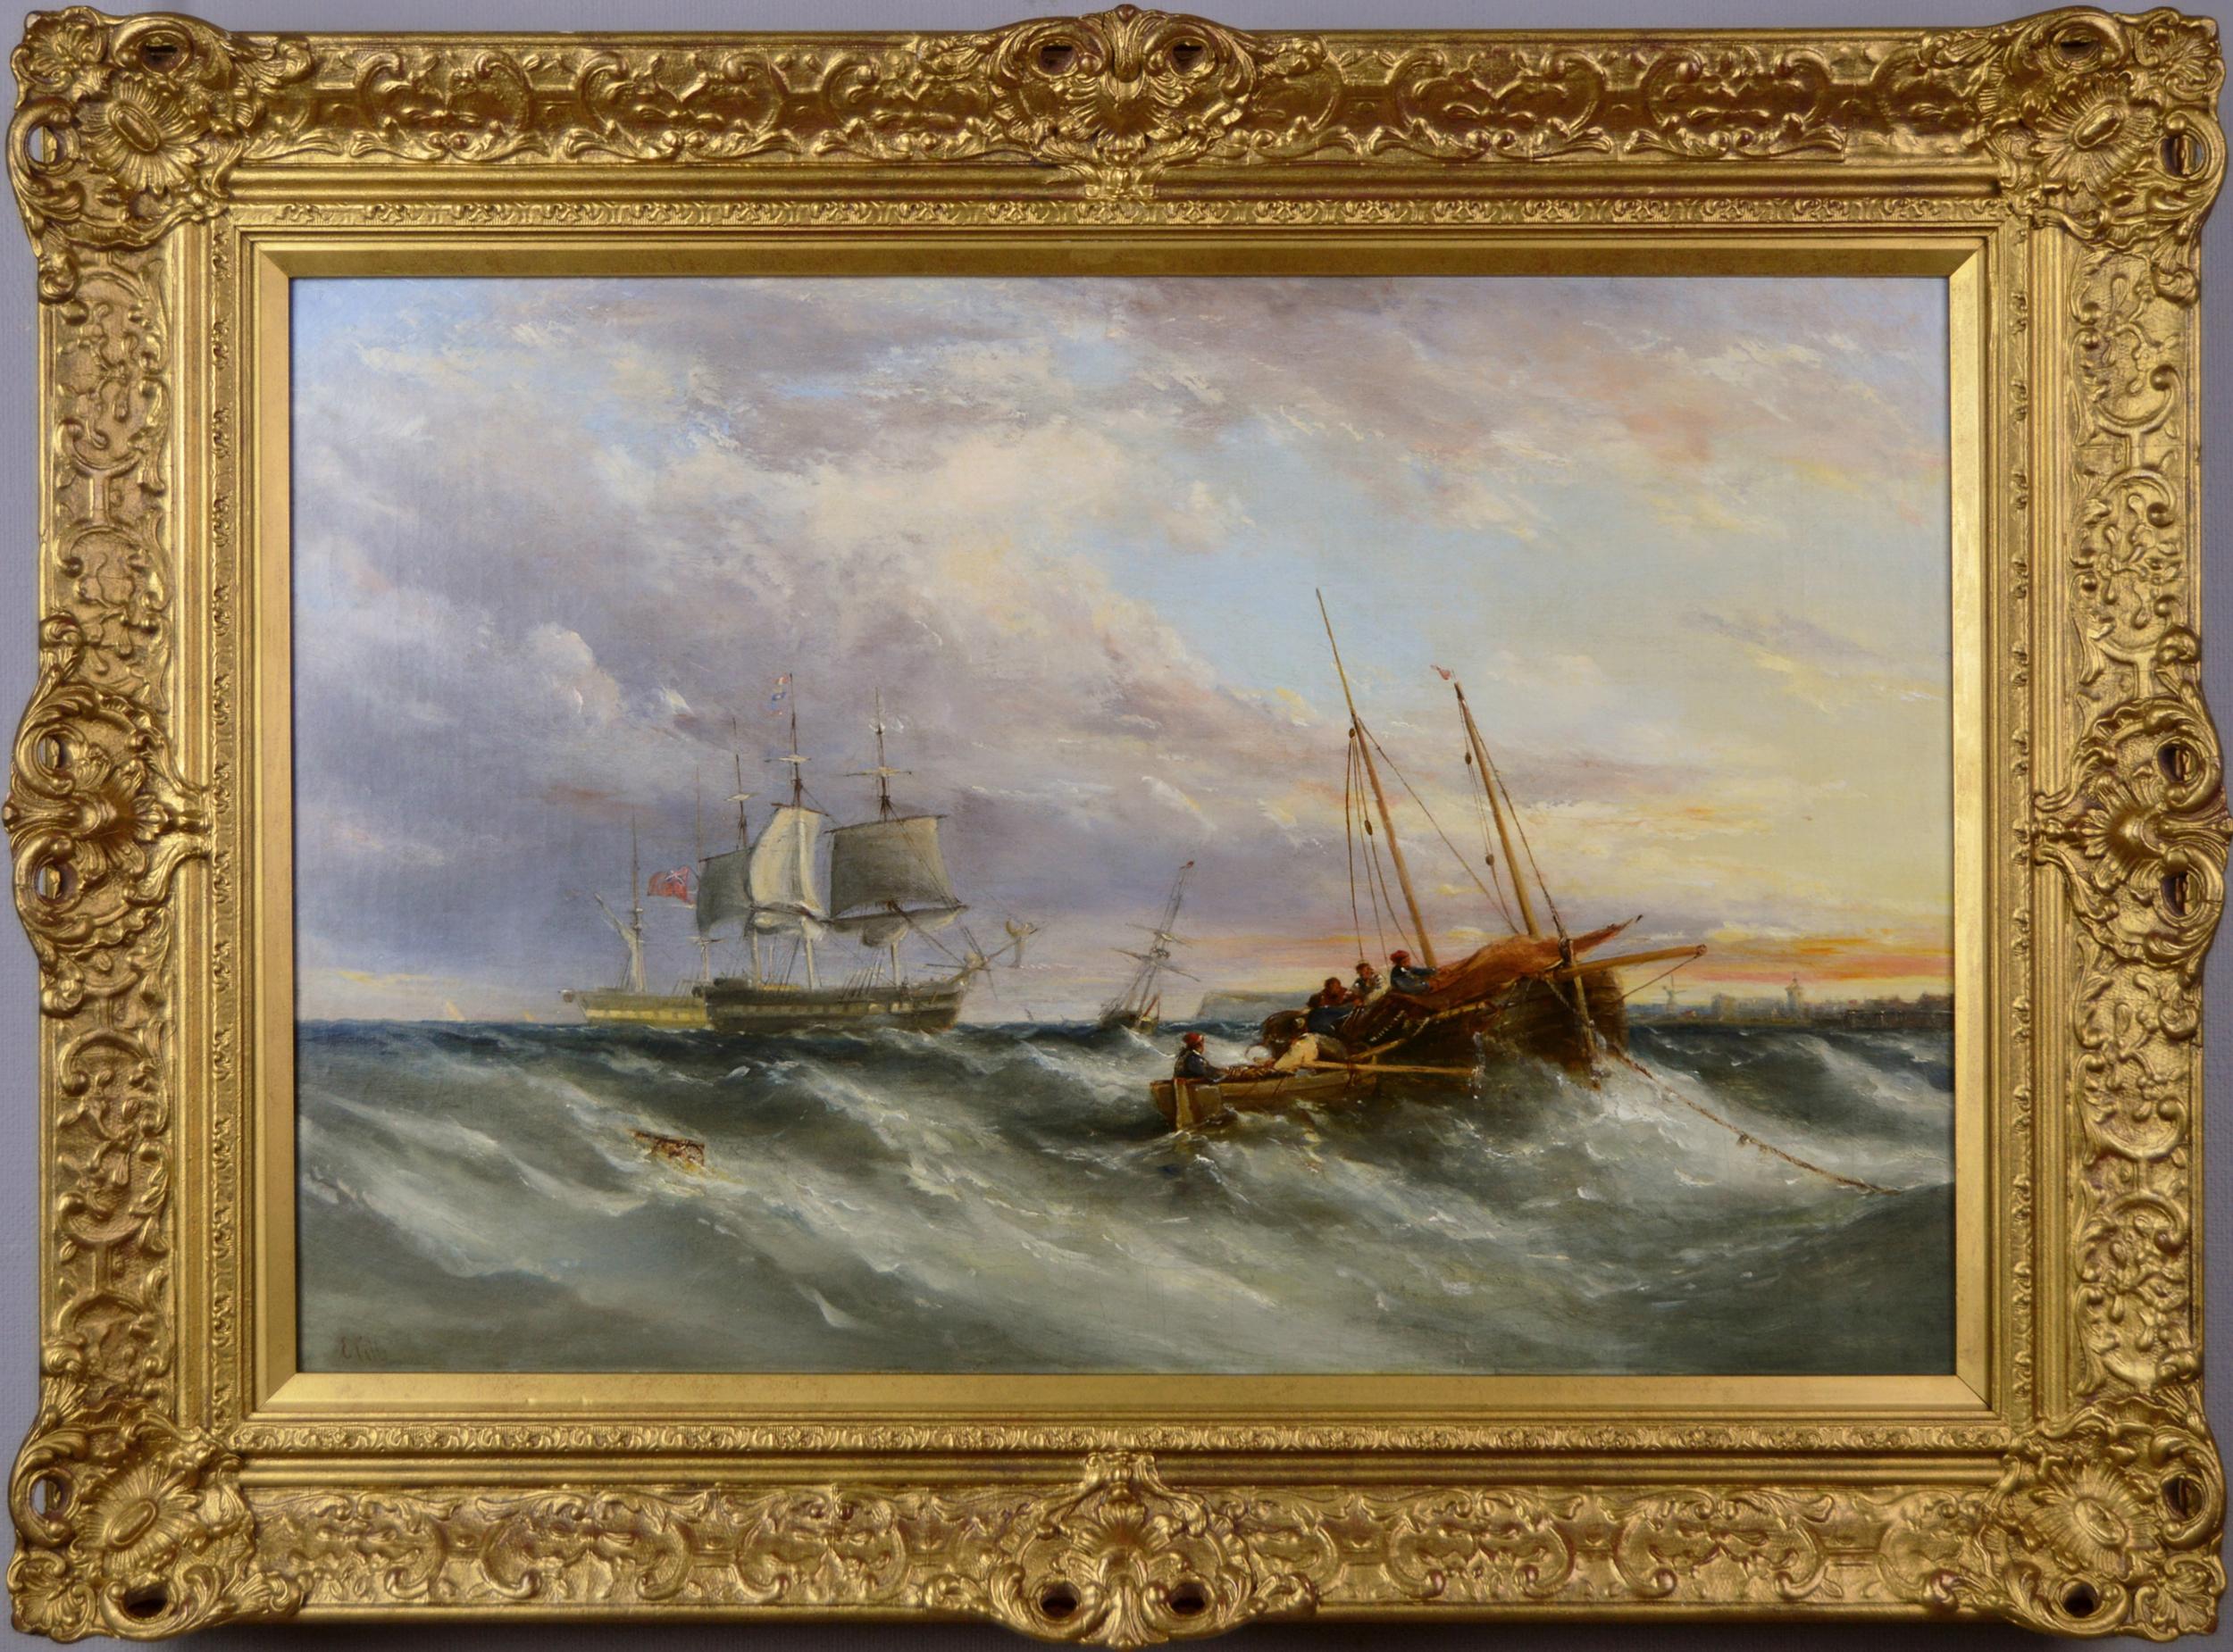 Ebenezer Colls Landscape Painting - 19th Century seascape oil painting of ships off a Dutch coast 